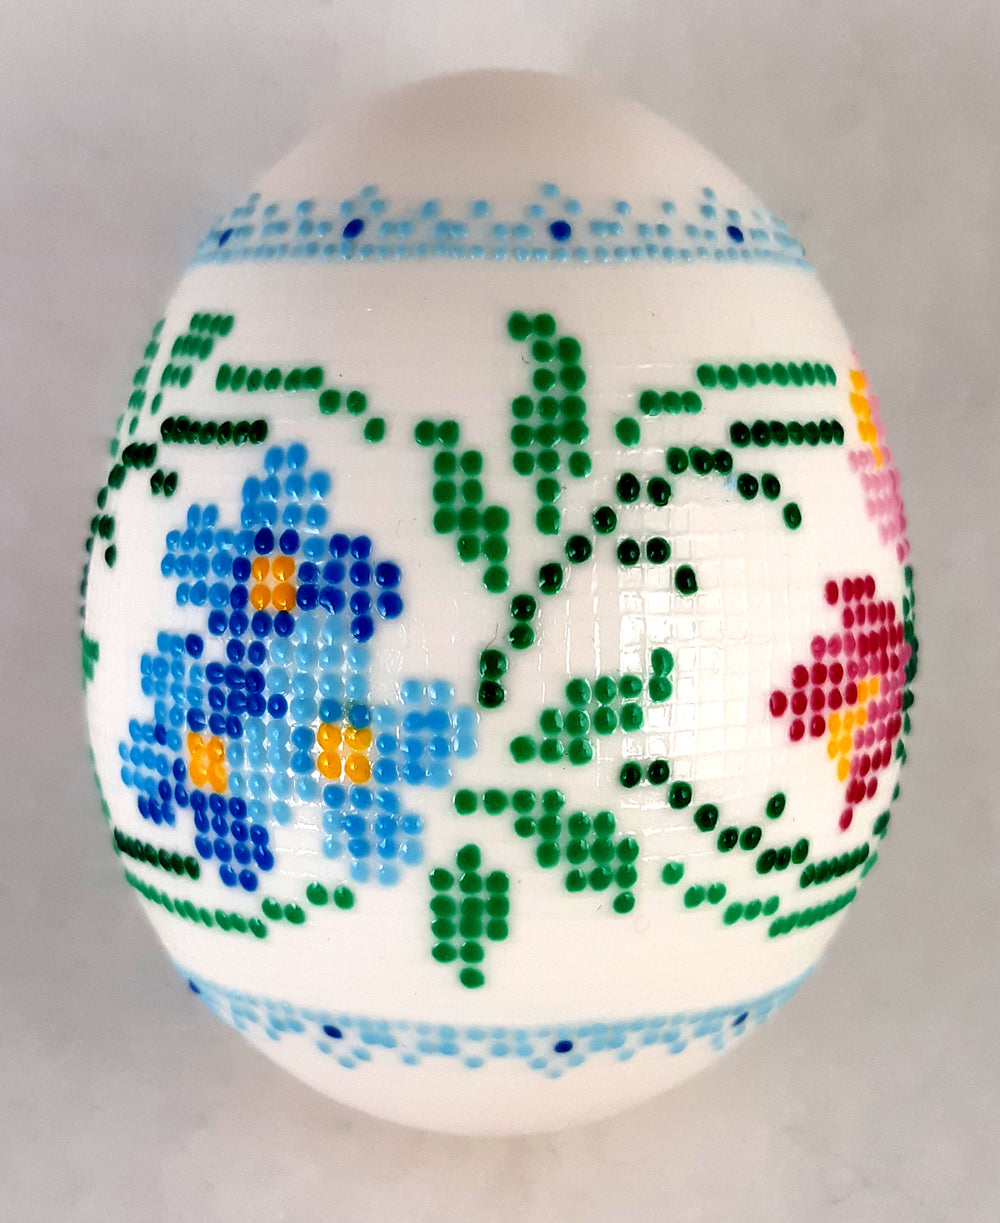 18. Using Cross Stitch Designs on Eggs With a Poppy Twist - Karen Hanlon - Saturday July 20th - 9:30am to 11:30am